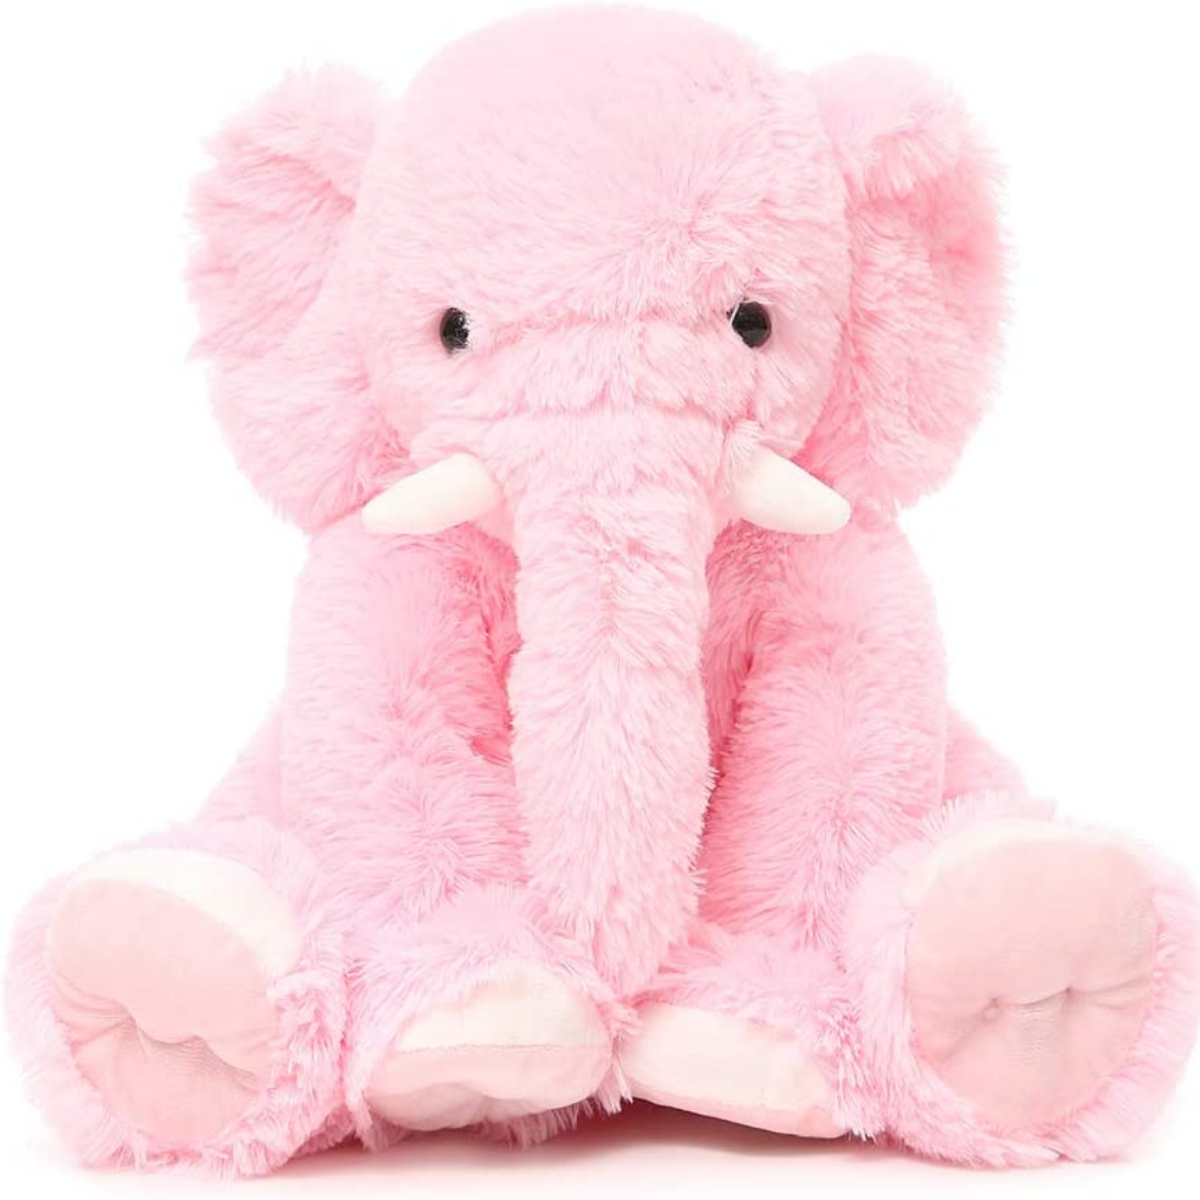 Elephant Stuffed Animal Toy, Multicolor, 19 Inches - MorisMos Plush Toys